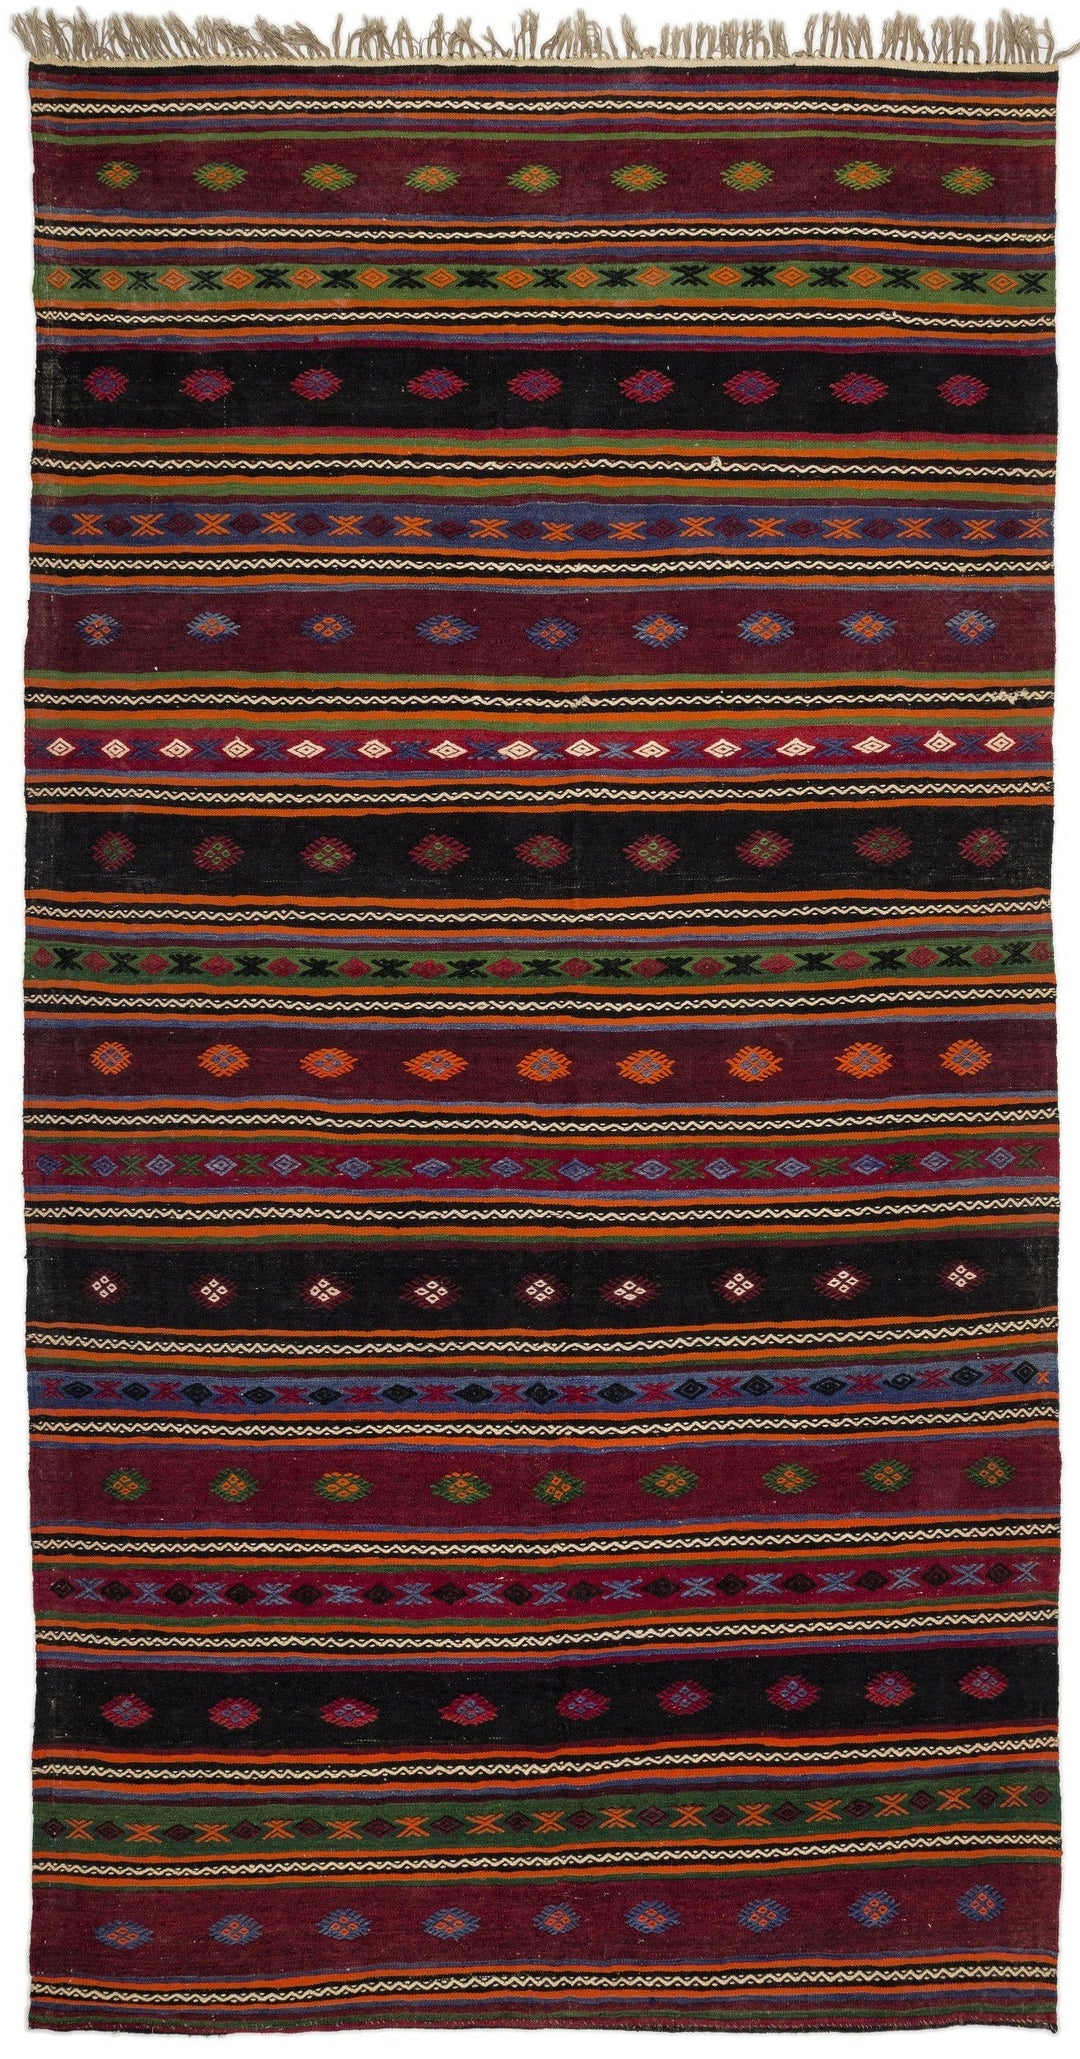 Cretan Beige Striped Wool Hand Woven Carpet 180 x 343